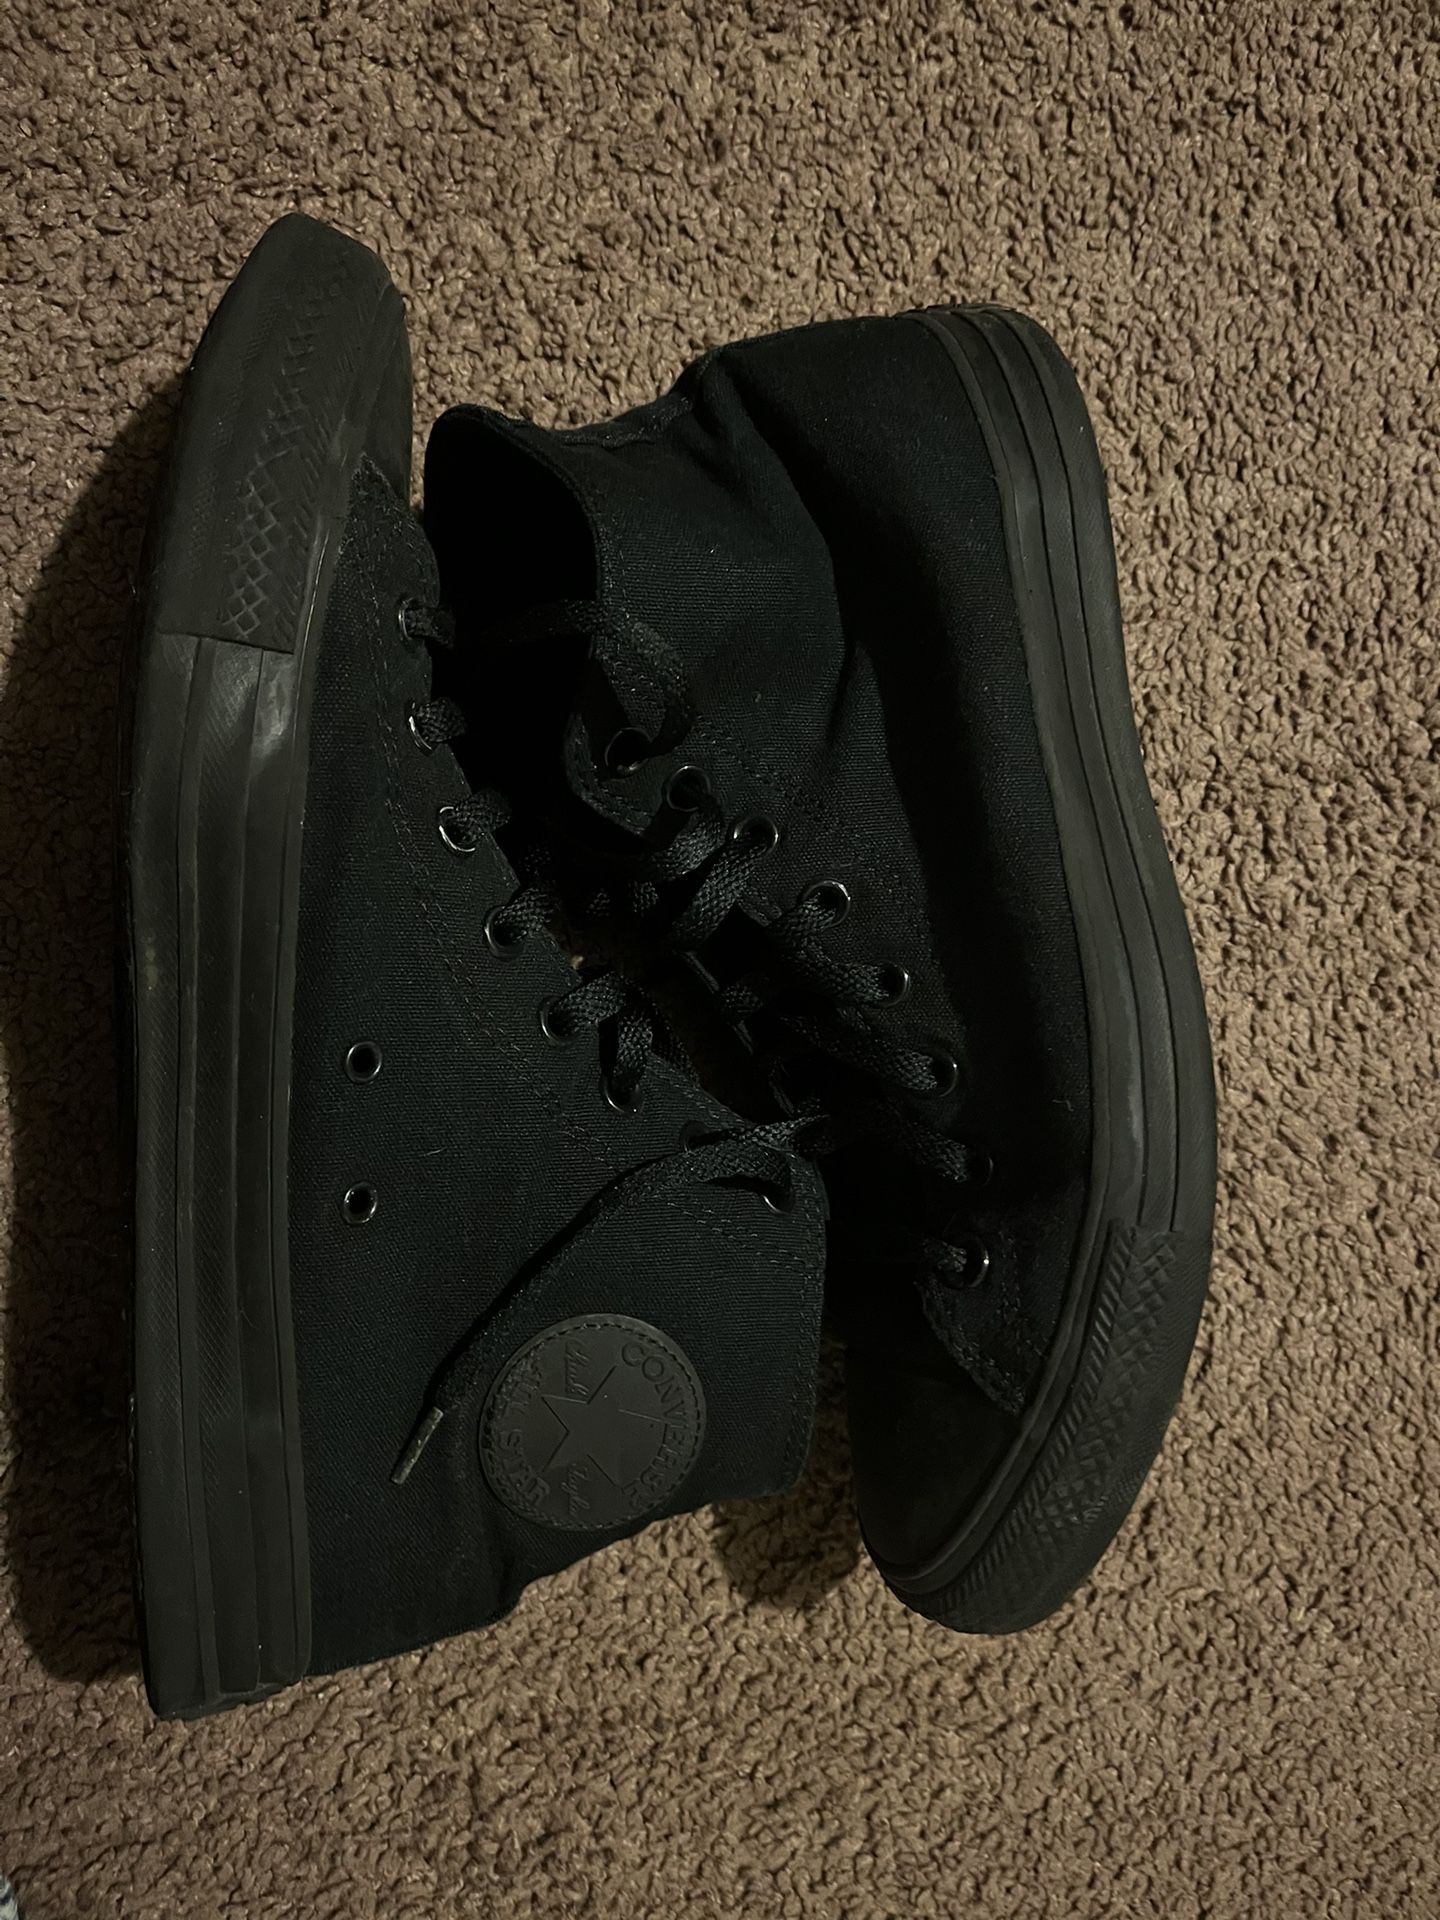 Black Converse (all Black)